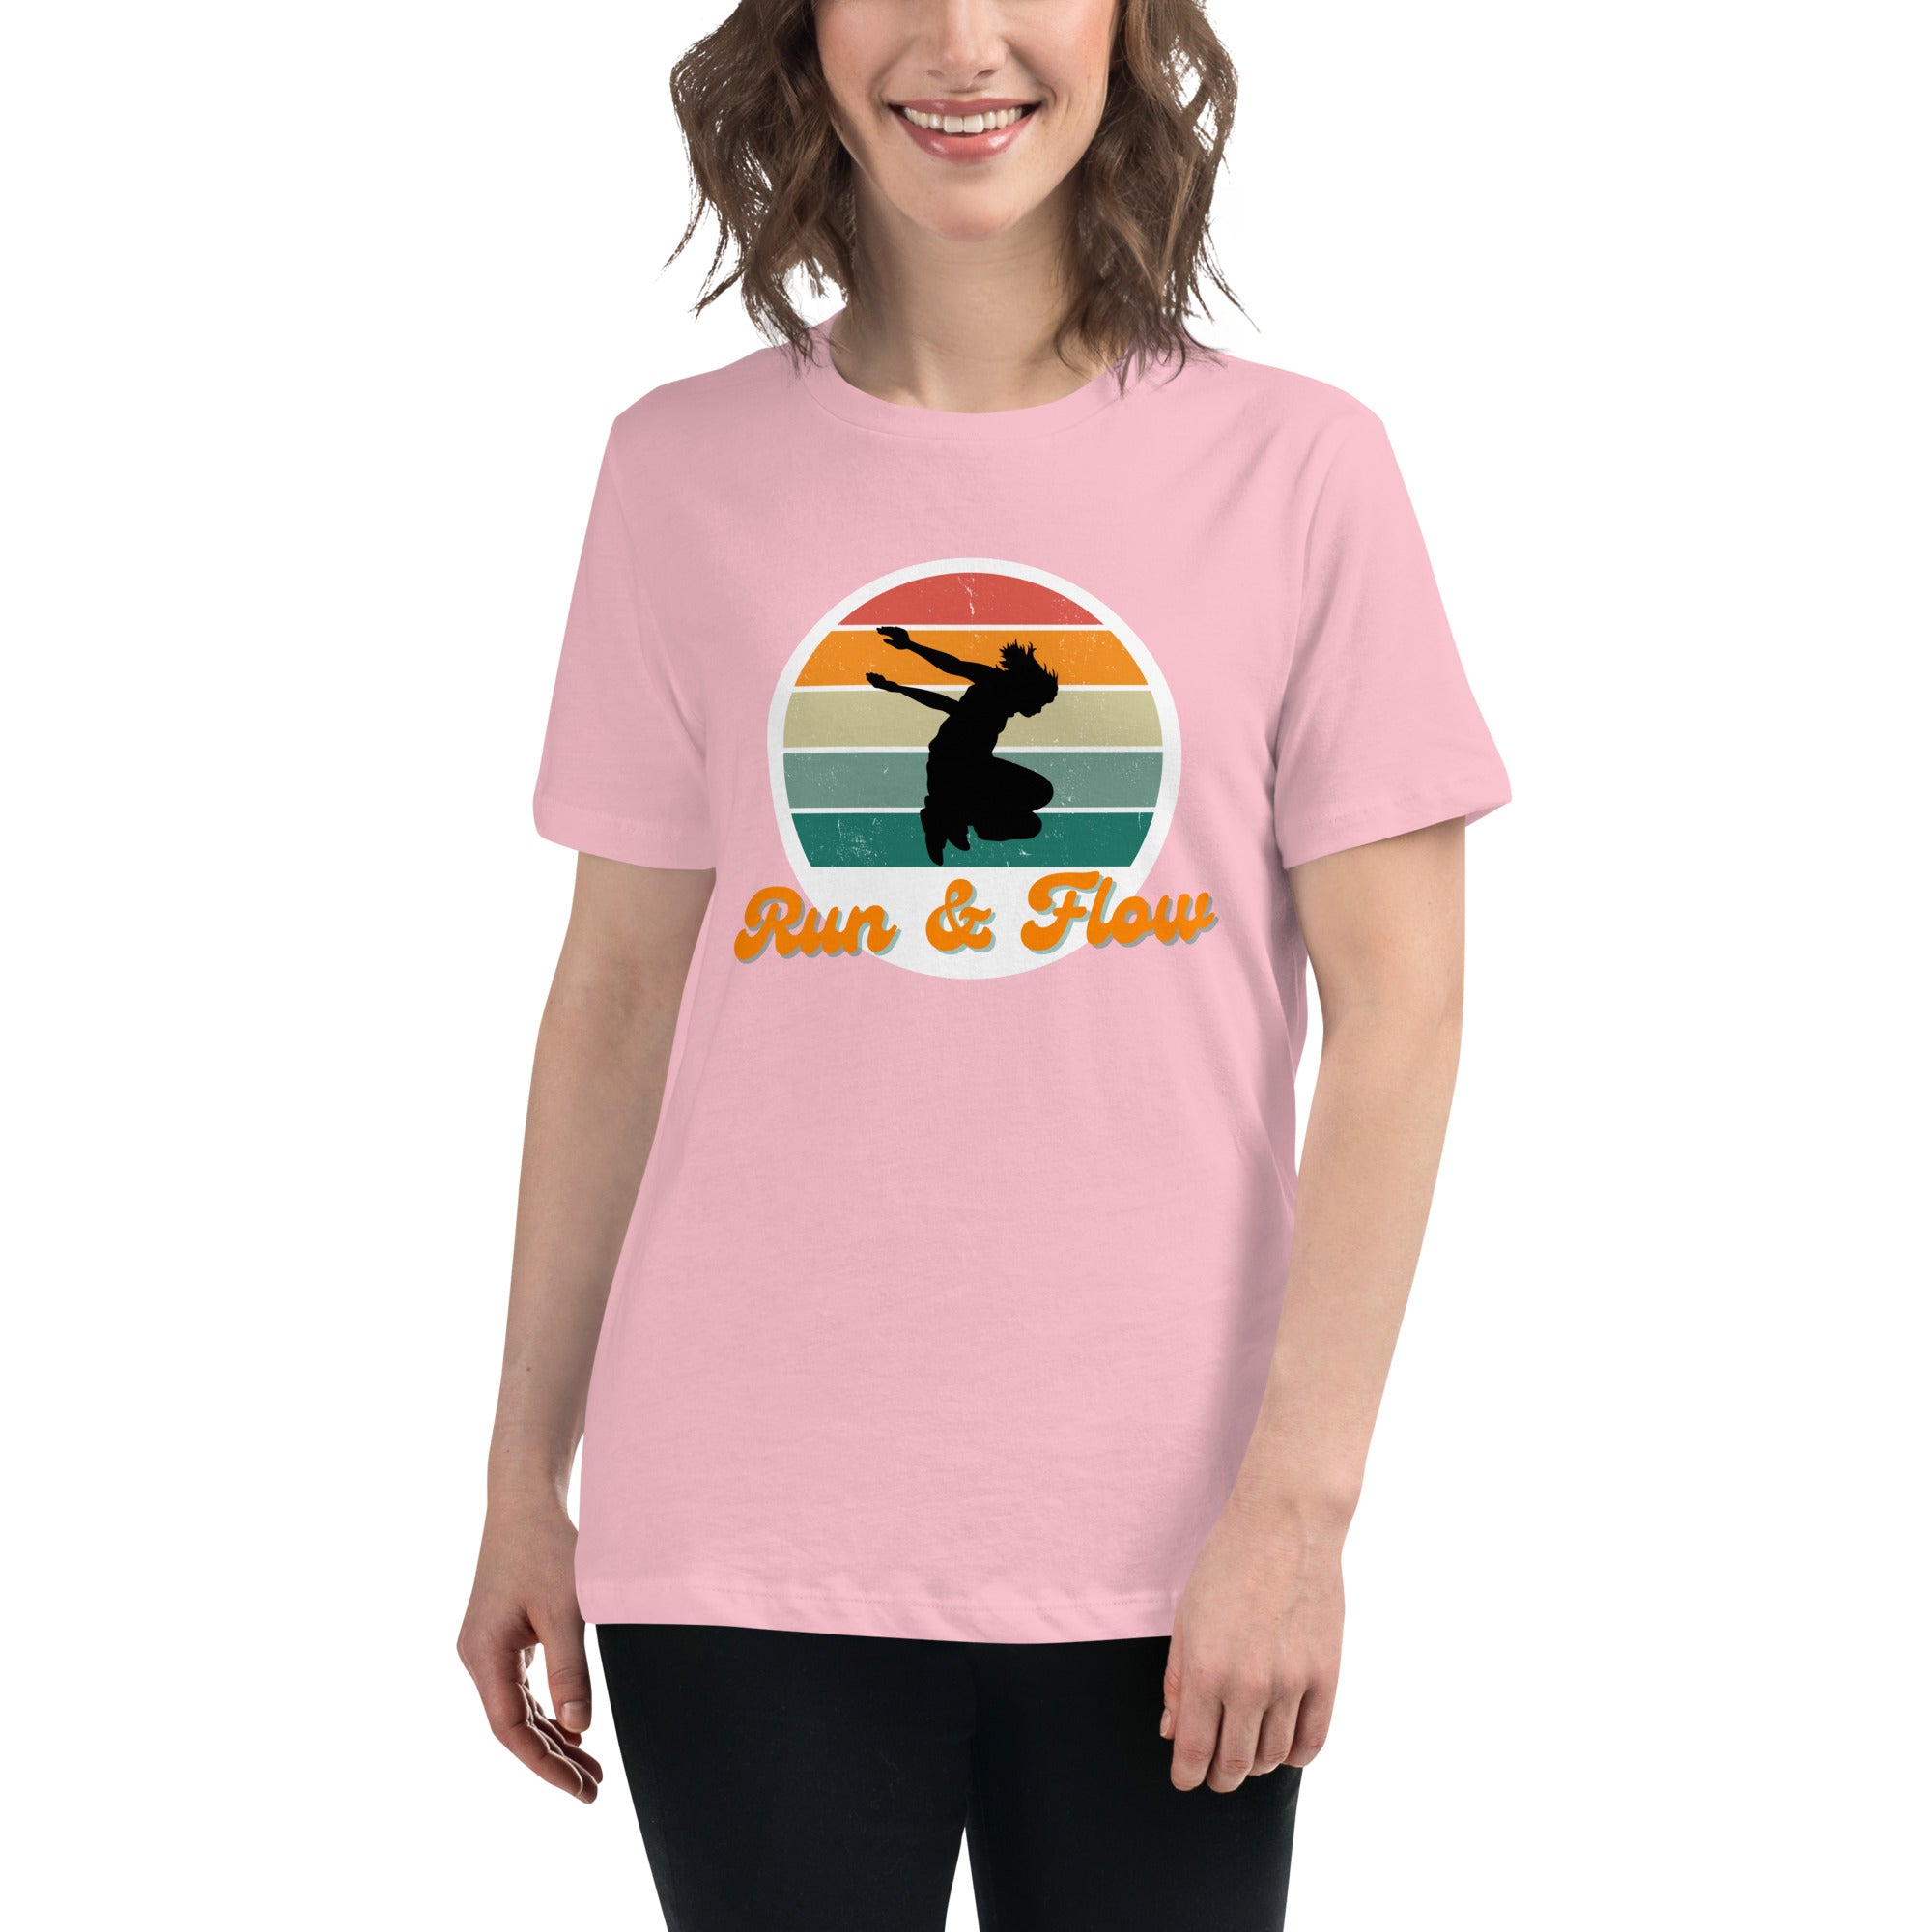 Run & Flow Women's Premium T-Shirt